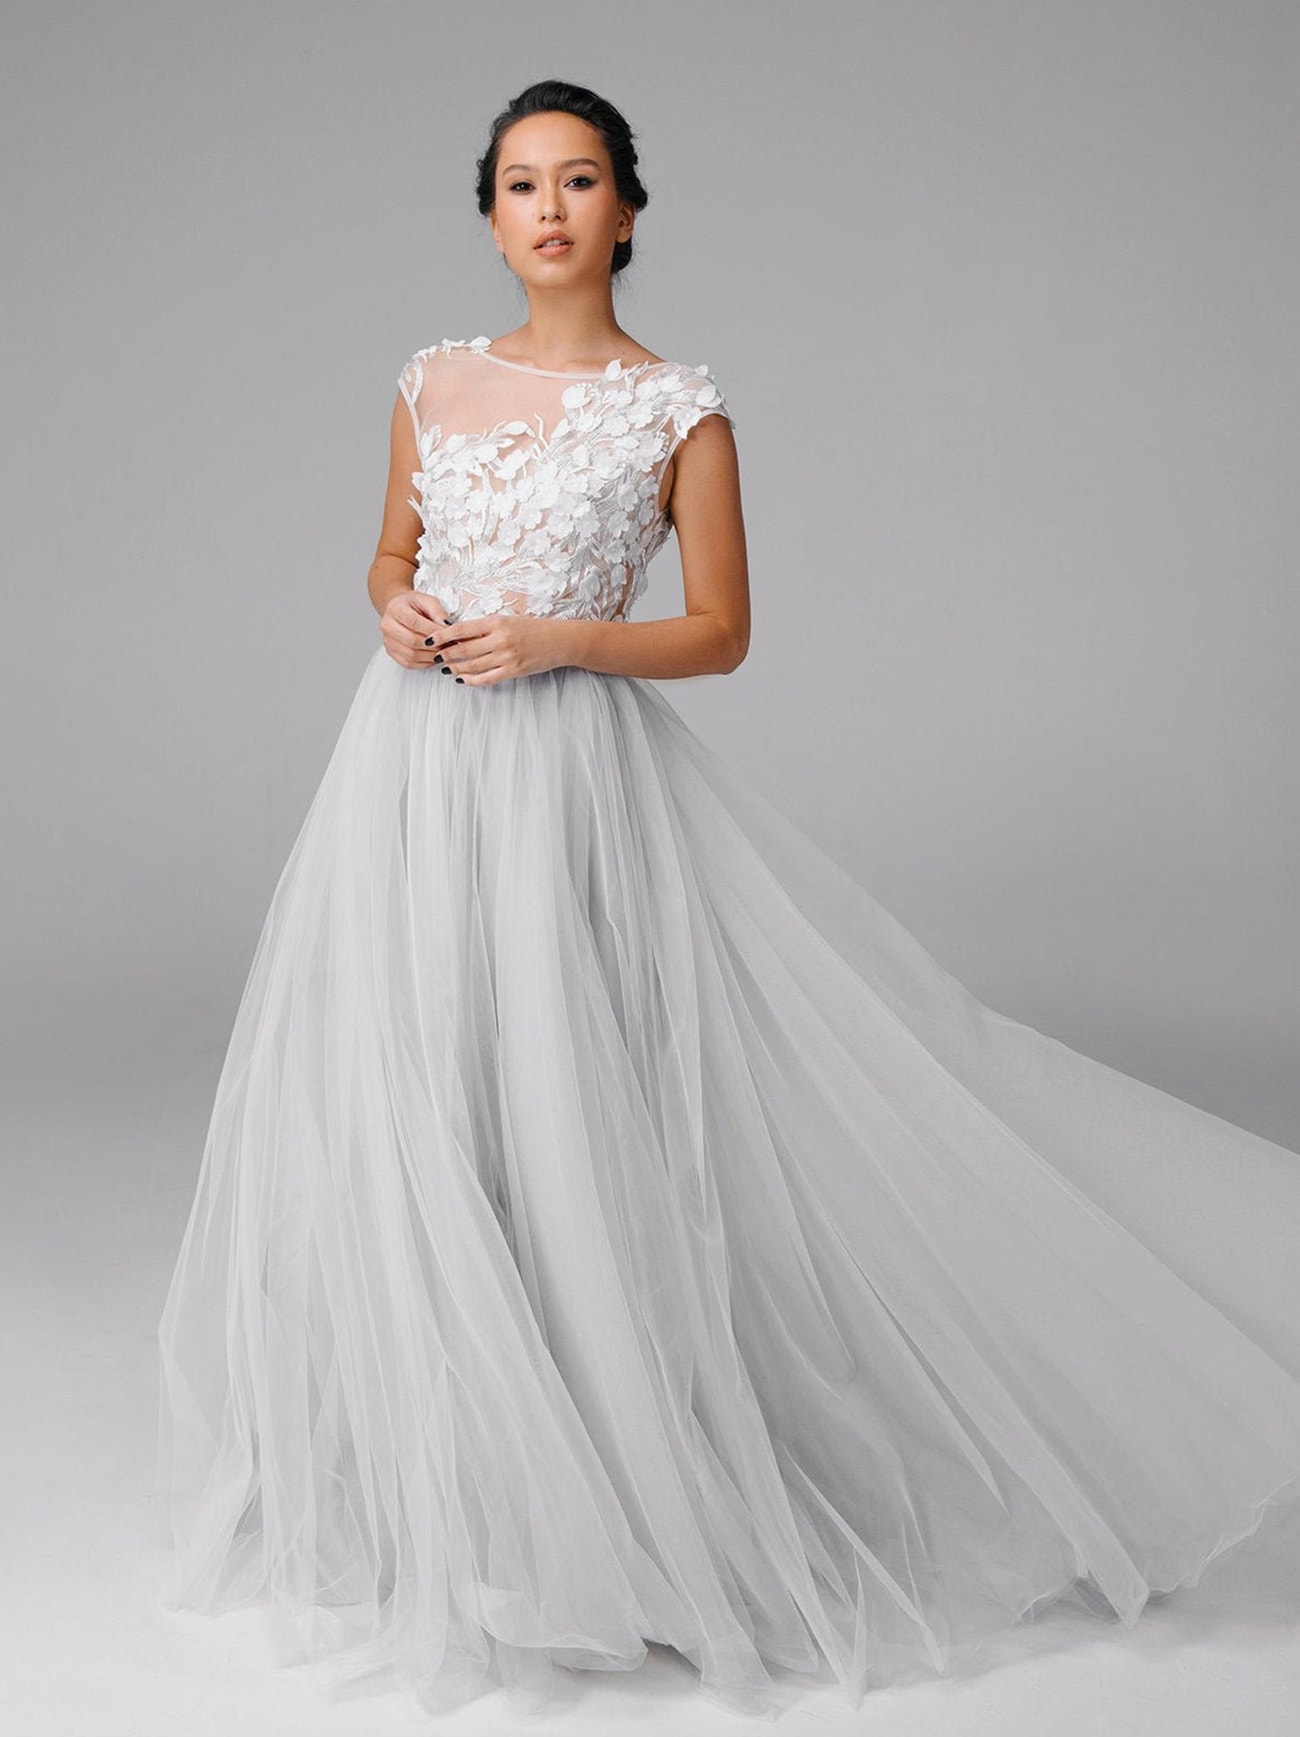 Simple square neckline wedding dress – Leighton • Piondress